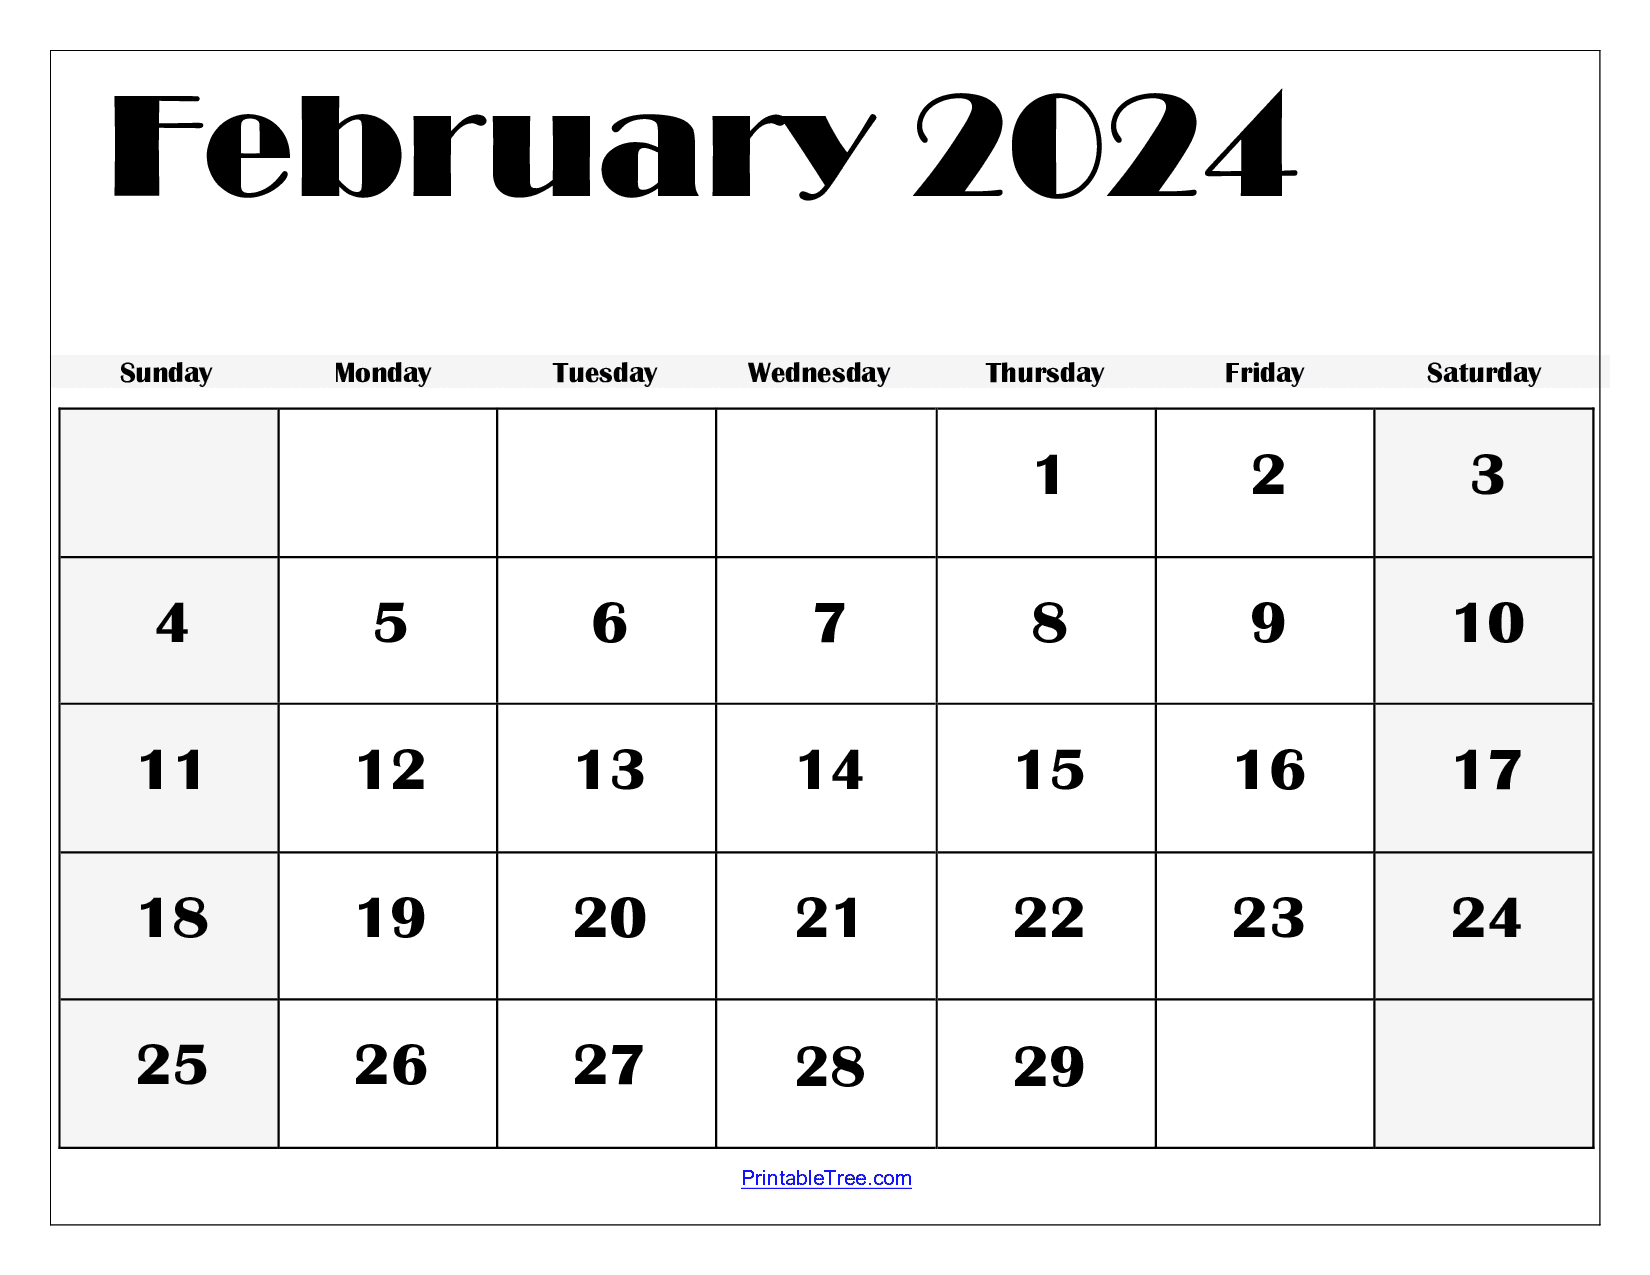 February 2024 Calendar Printable Pdf Template With Holidays for Feb 2024 Printable Calendar